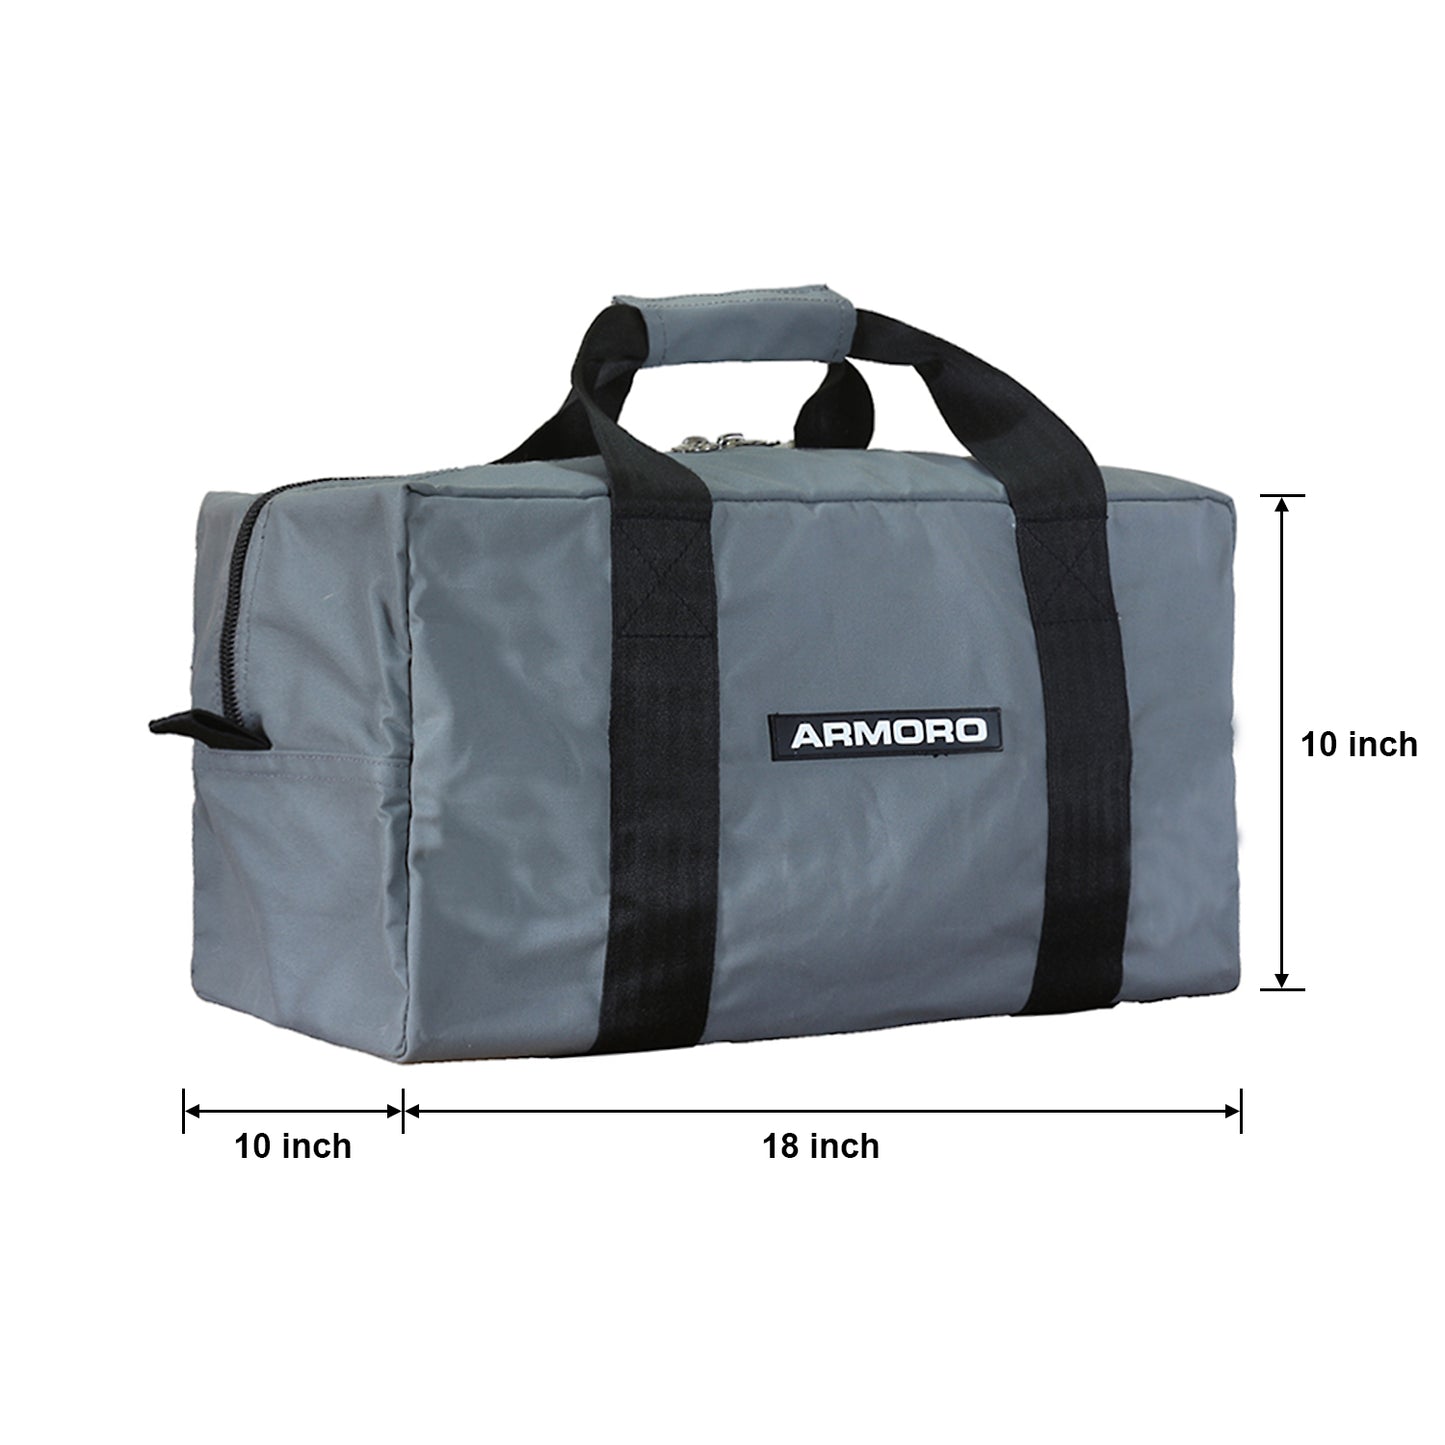 Duffle Bag - armoro